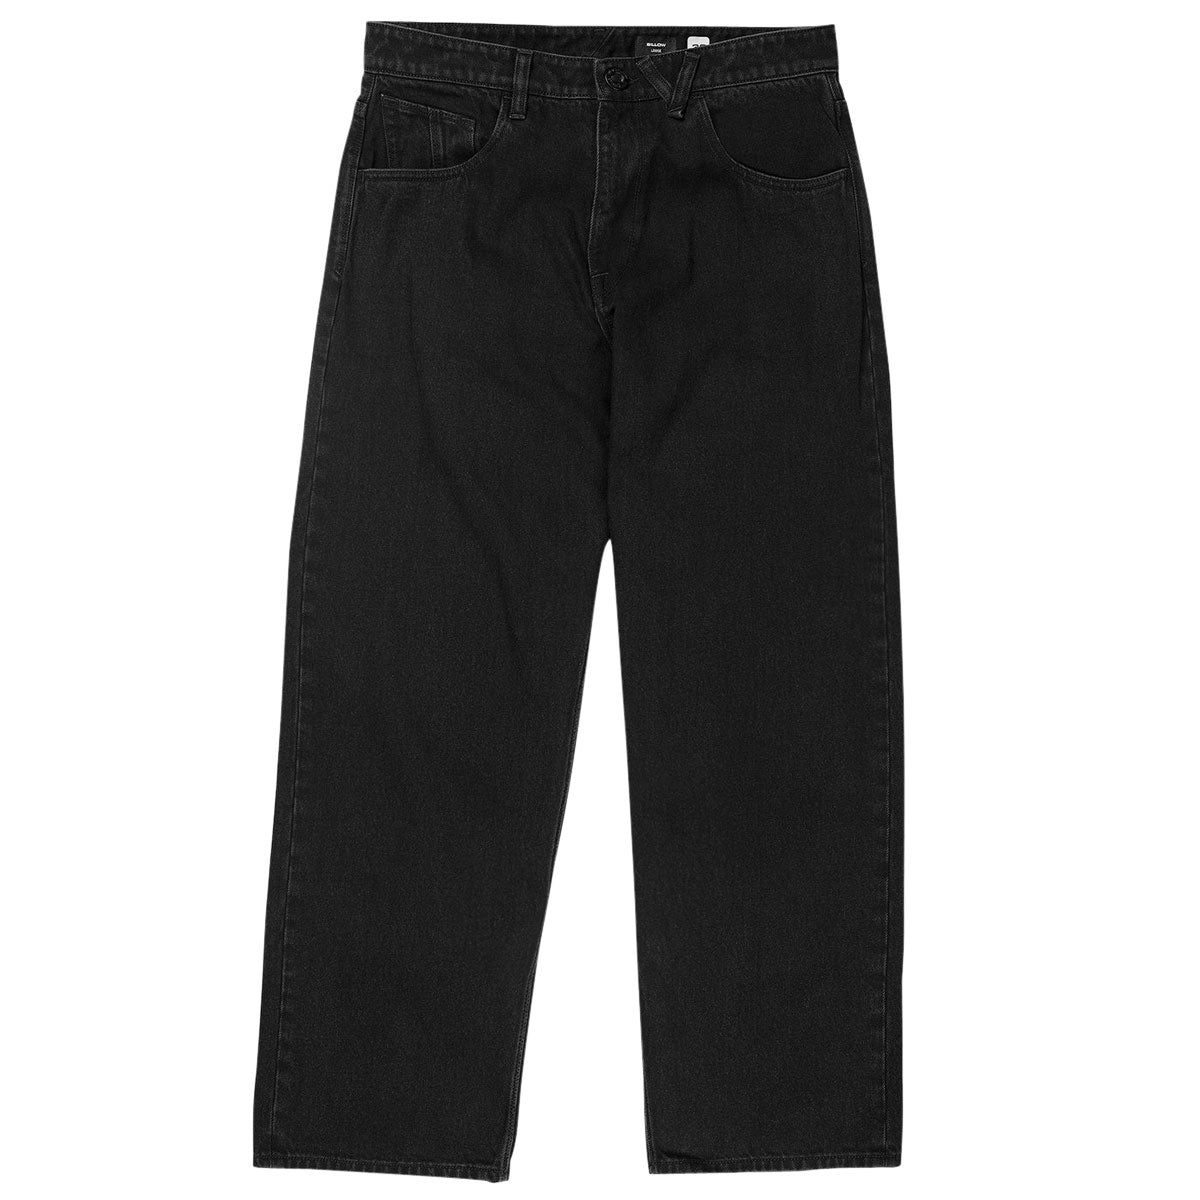 Volcom Billow Denim Jeans - Black image 2